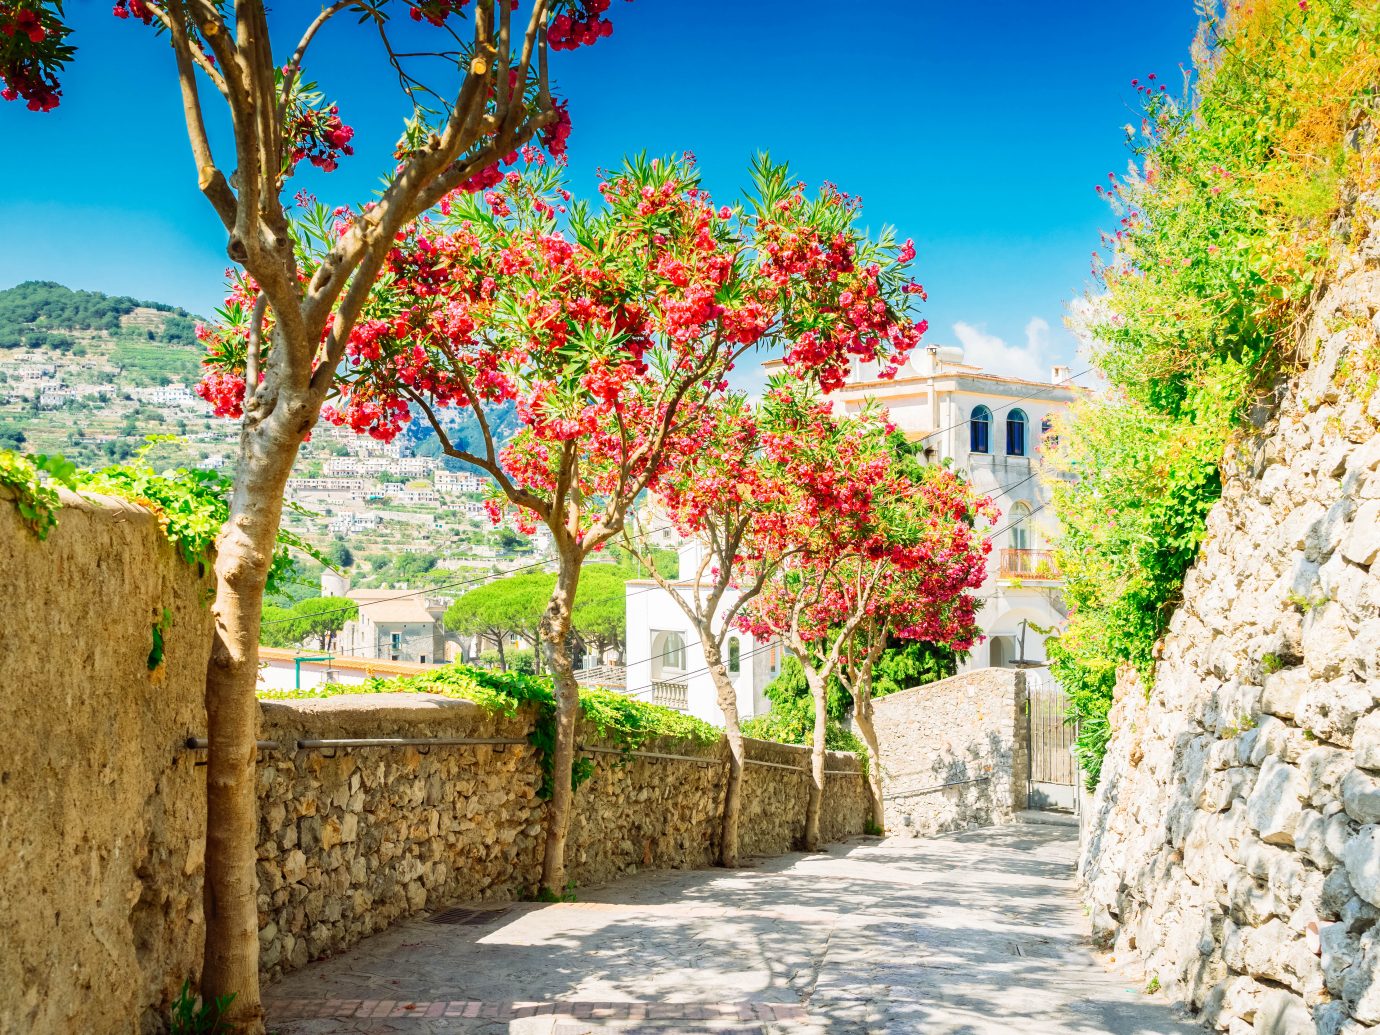 Street in Ravello village, Amalfi coast of Italy, toned image